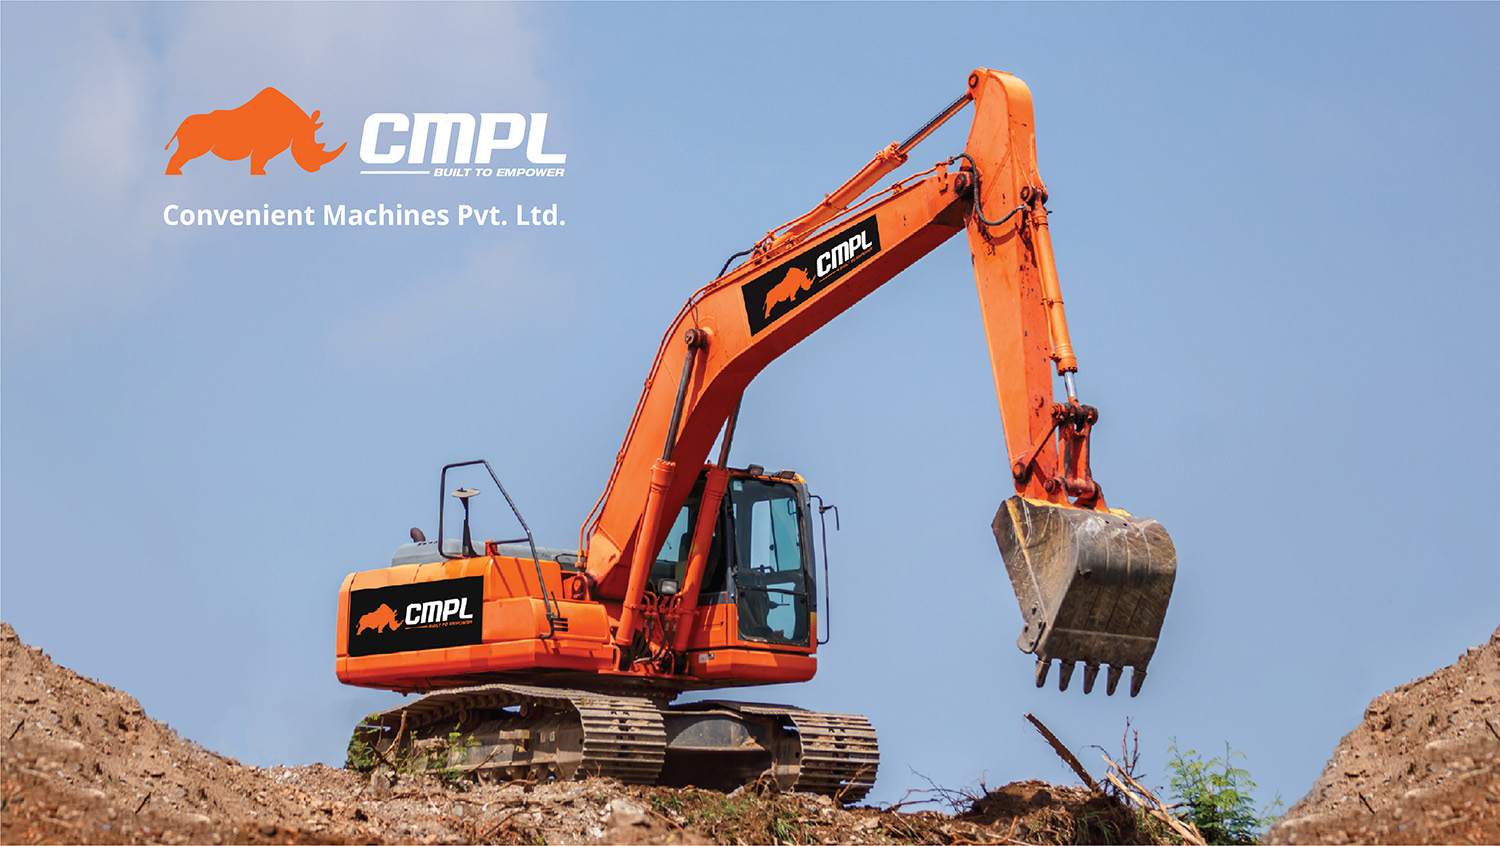 CMPL | Convenient Machines Pvt. Ltd.